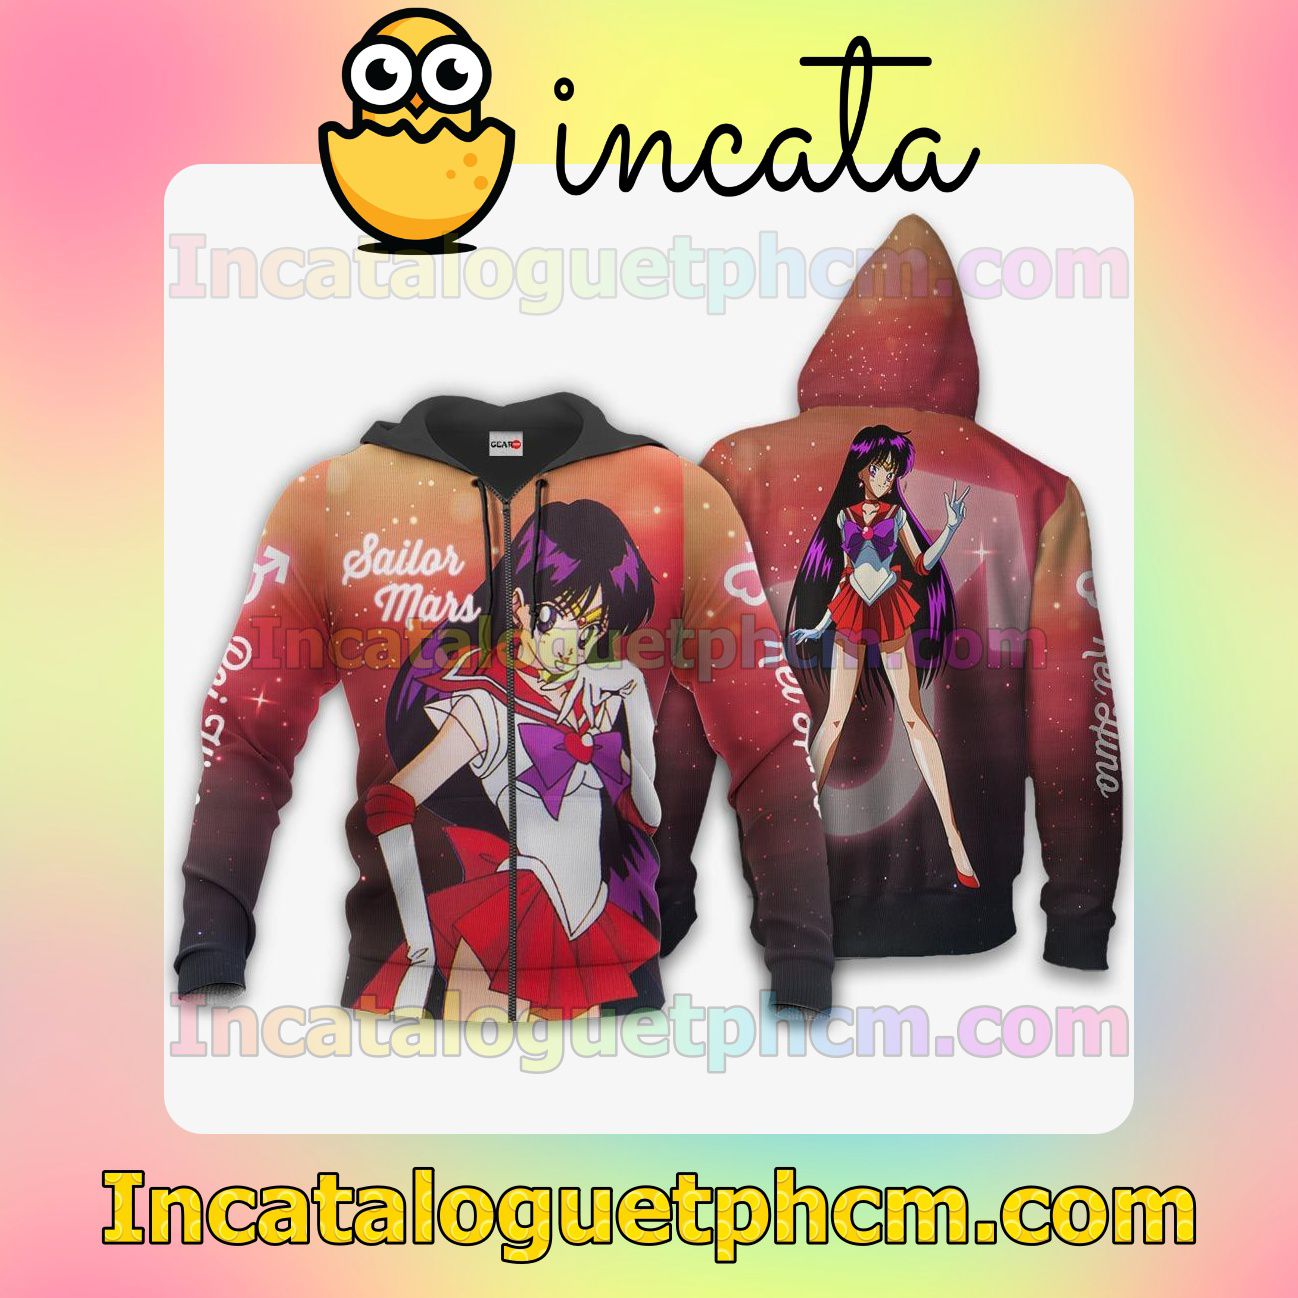 Sailor Mars Rei Hino Sailor Moon Anime Clothing Merch Zip Hoodie Jacket Shirts